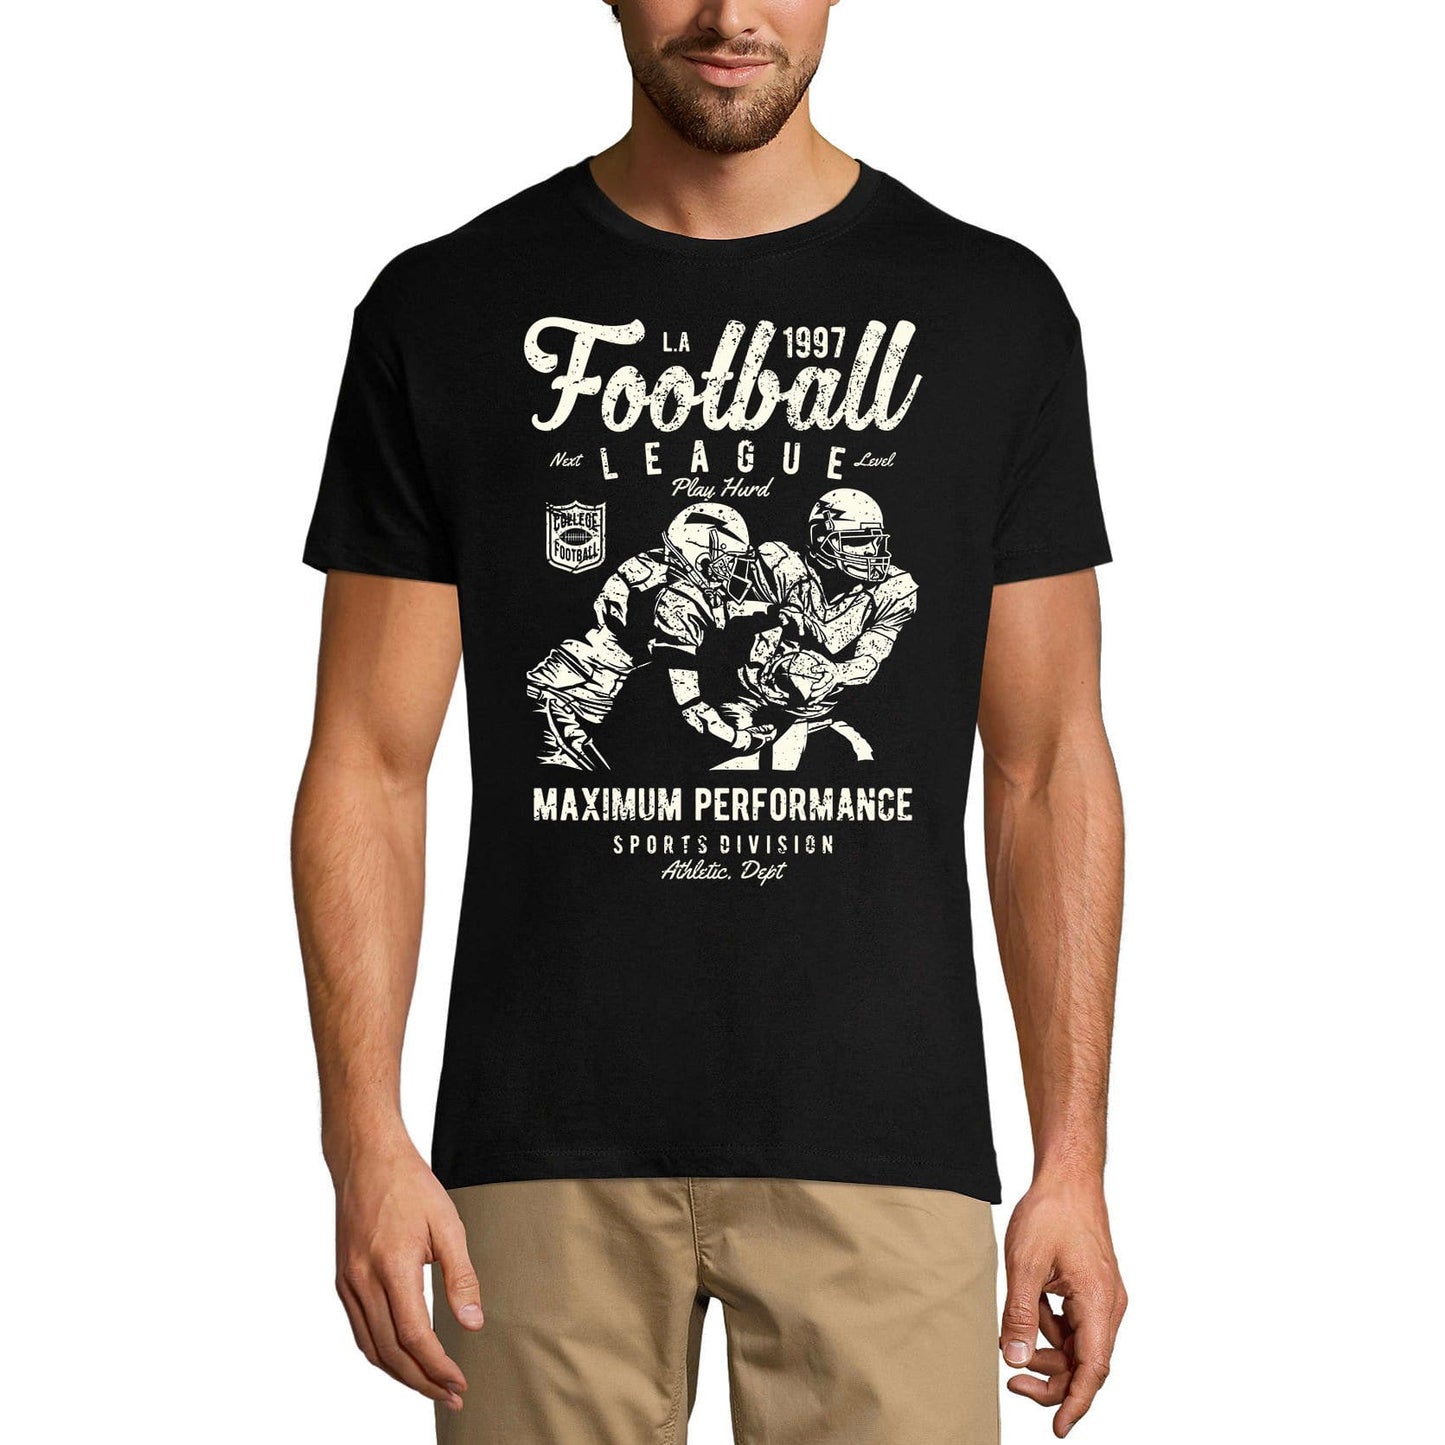 ULTRABASIC Men's T-Shirt LA Football League 1997 Play Hard - Sport Division Tee Shirt